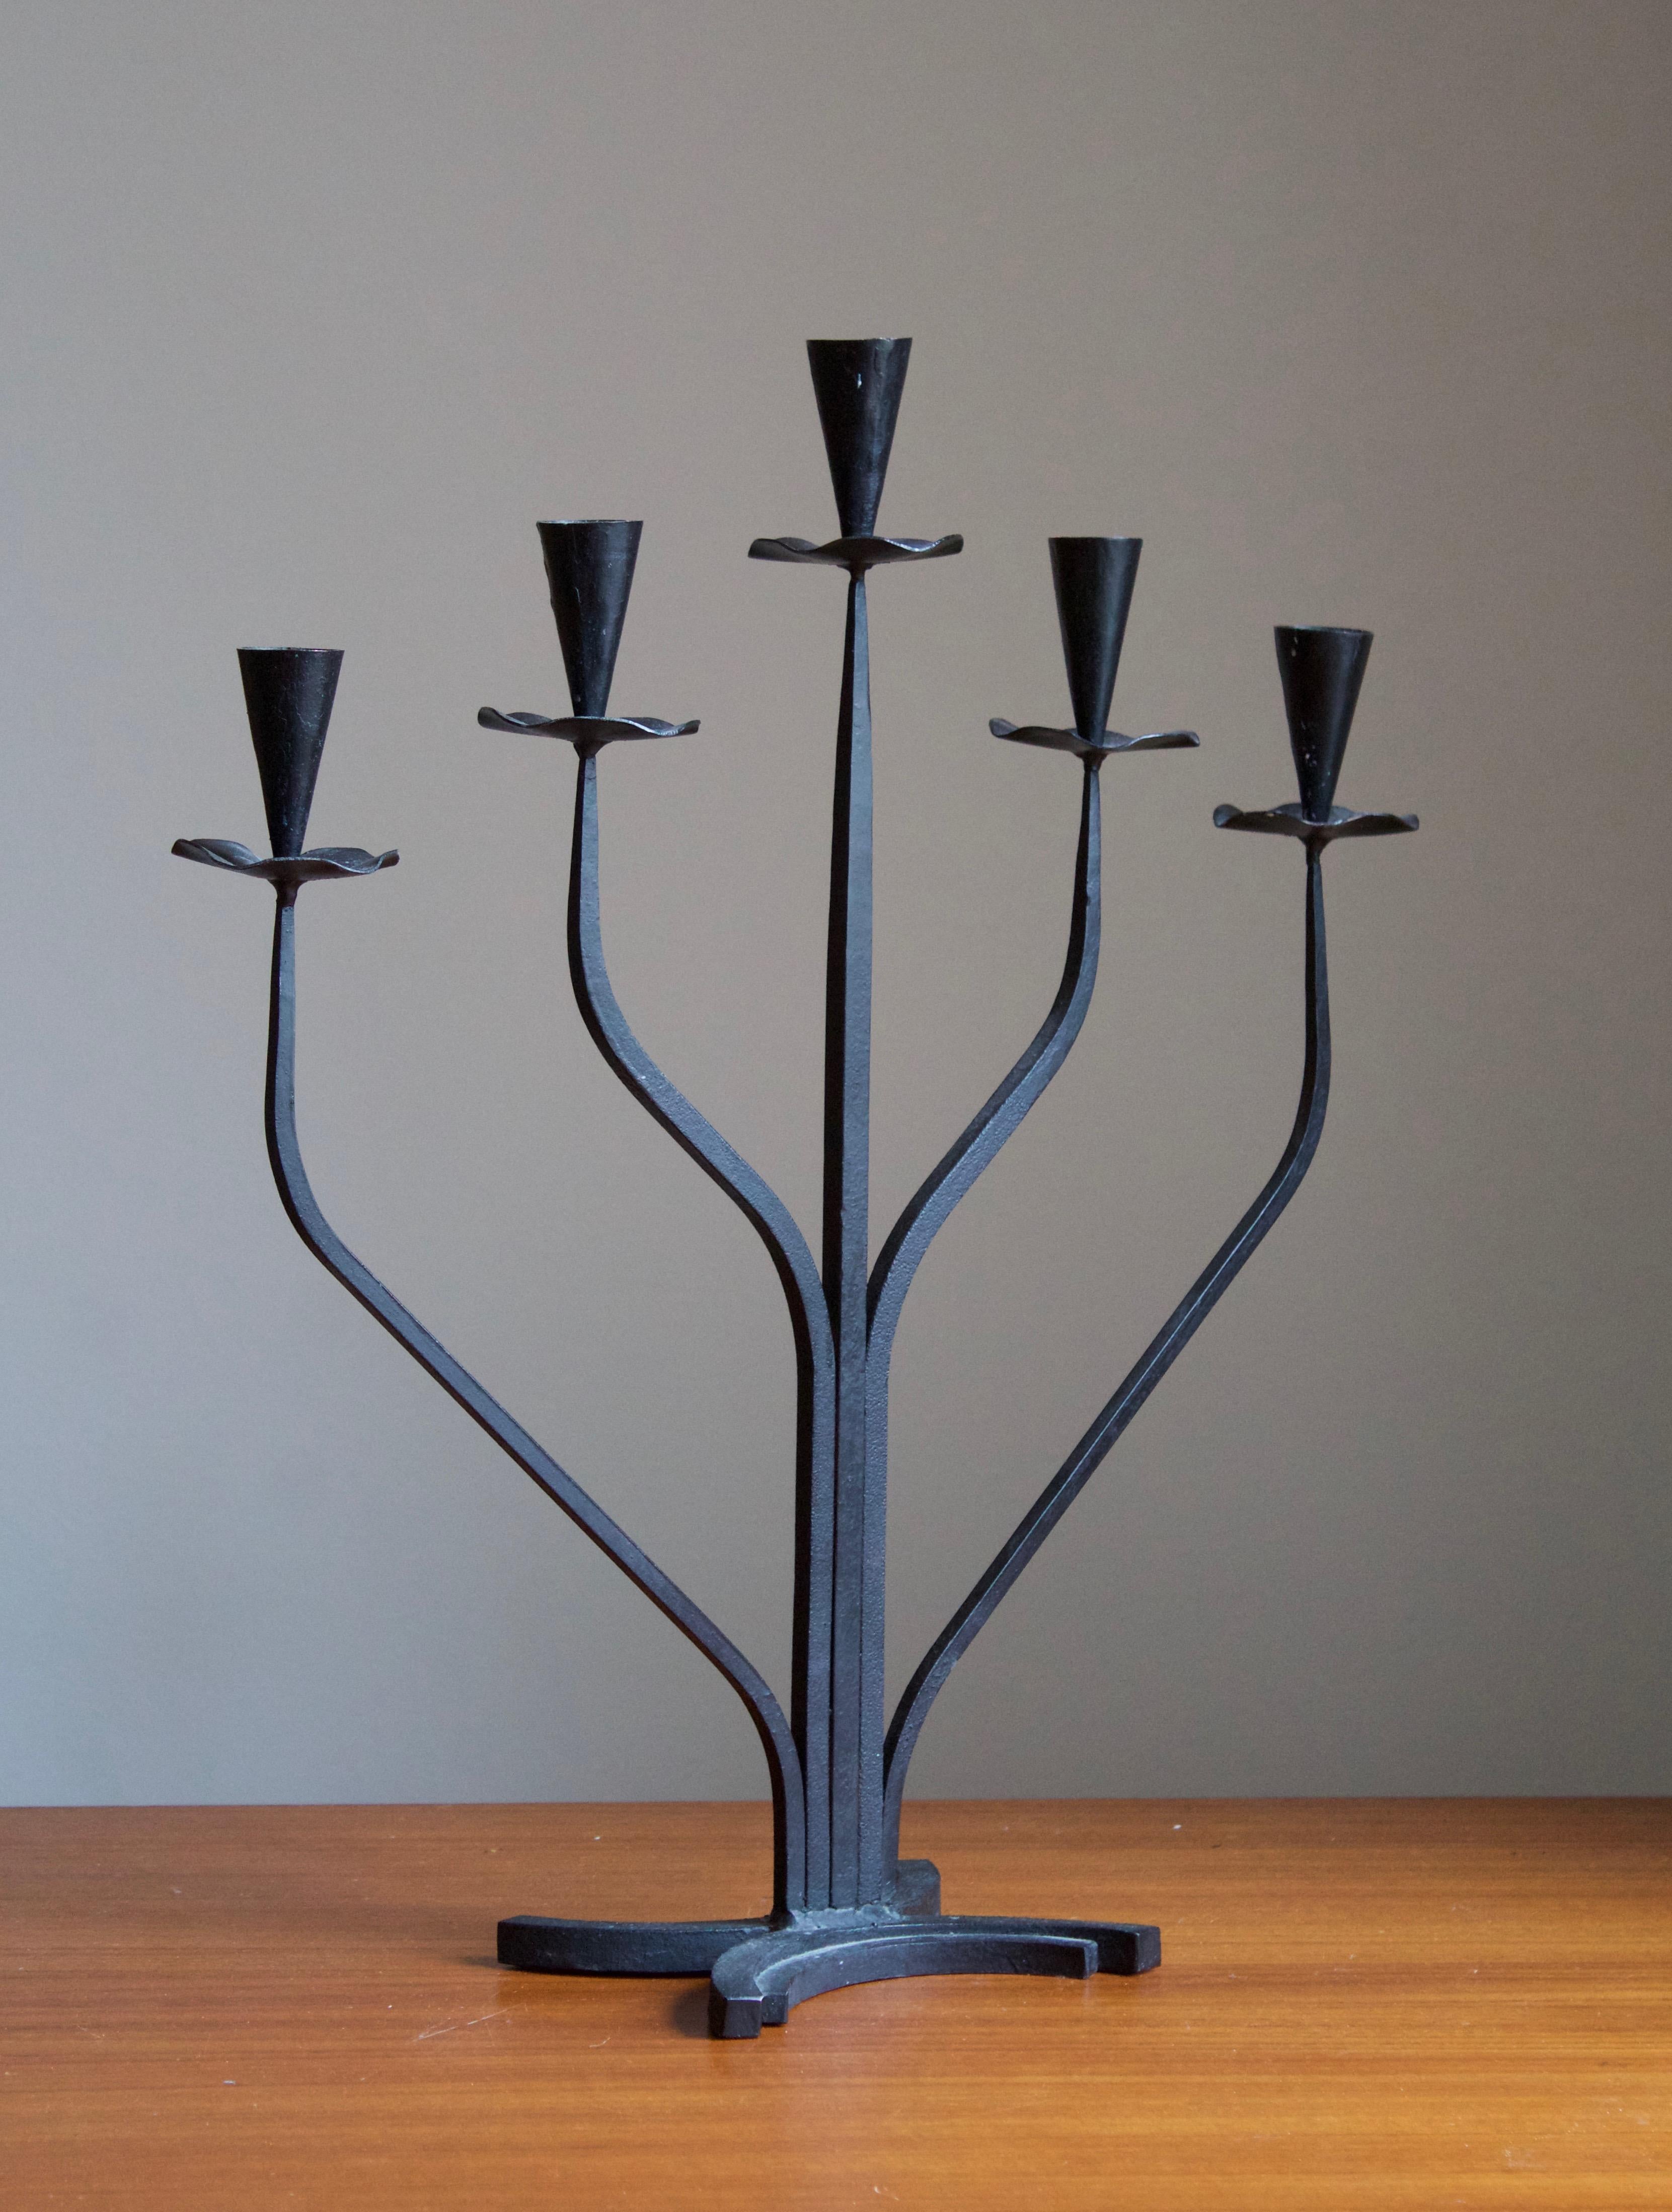 A five-armed candelabra. Made in Sweden, c. 1940s-1950s.